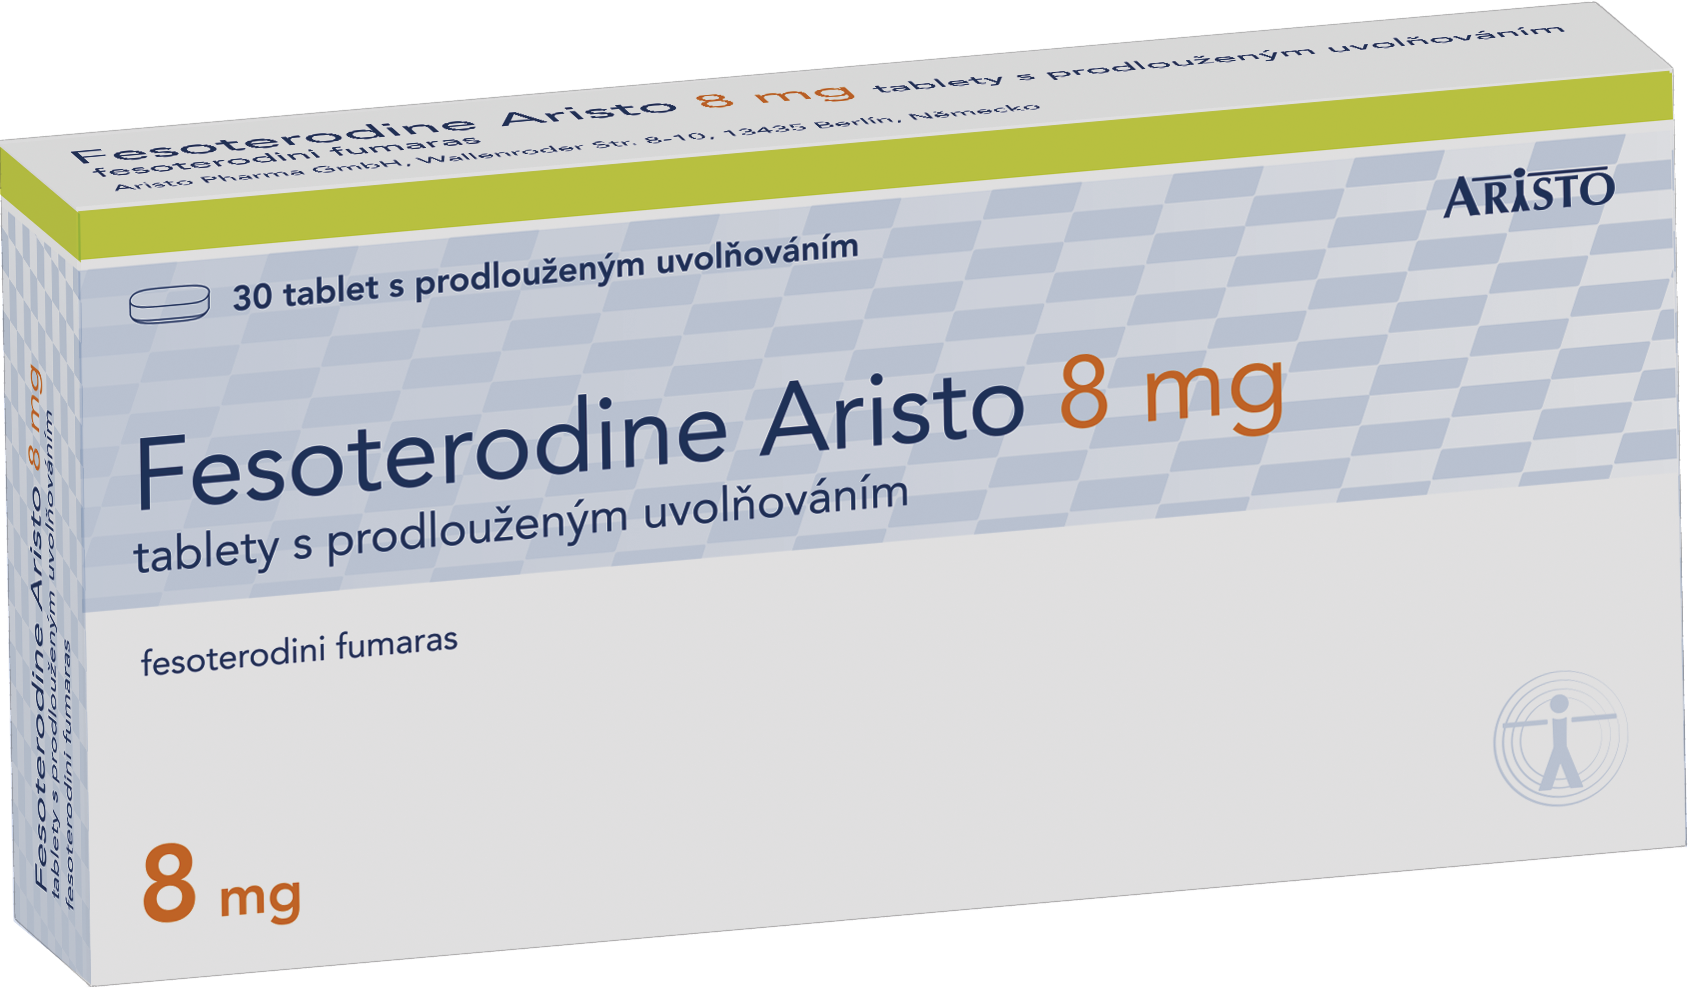 Fesoterodine Aristo 8 mg